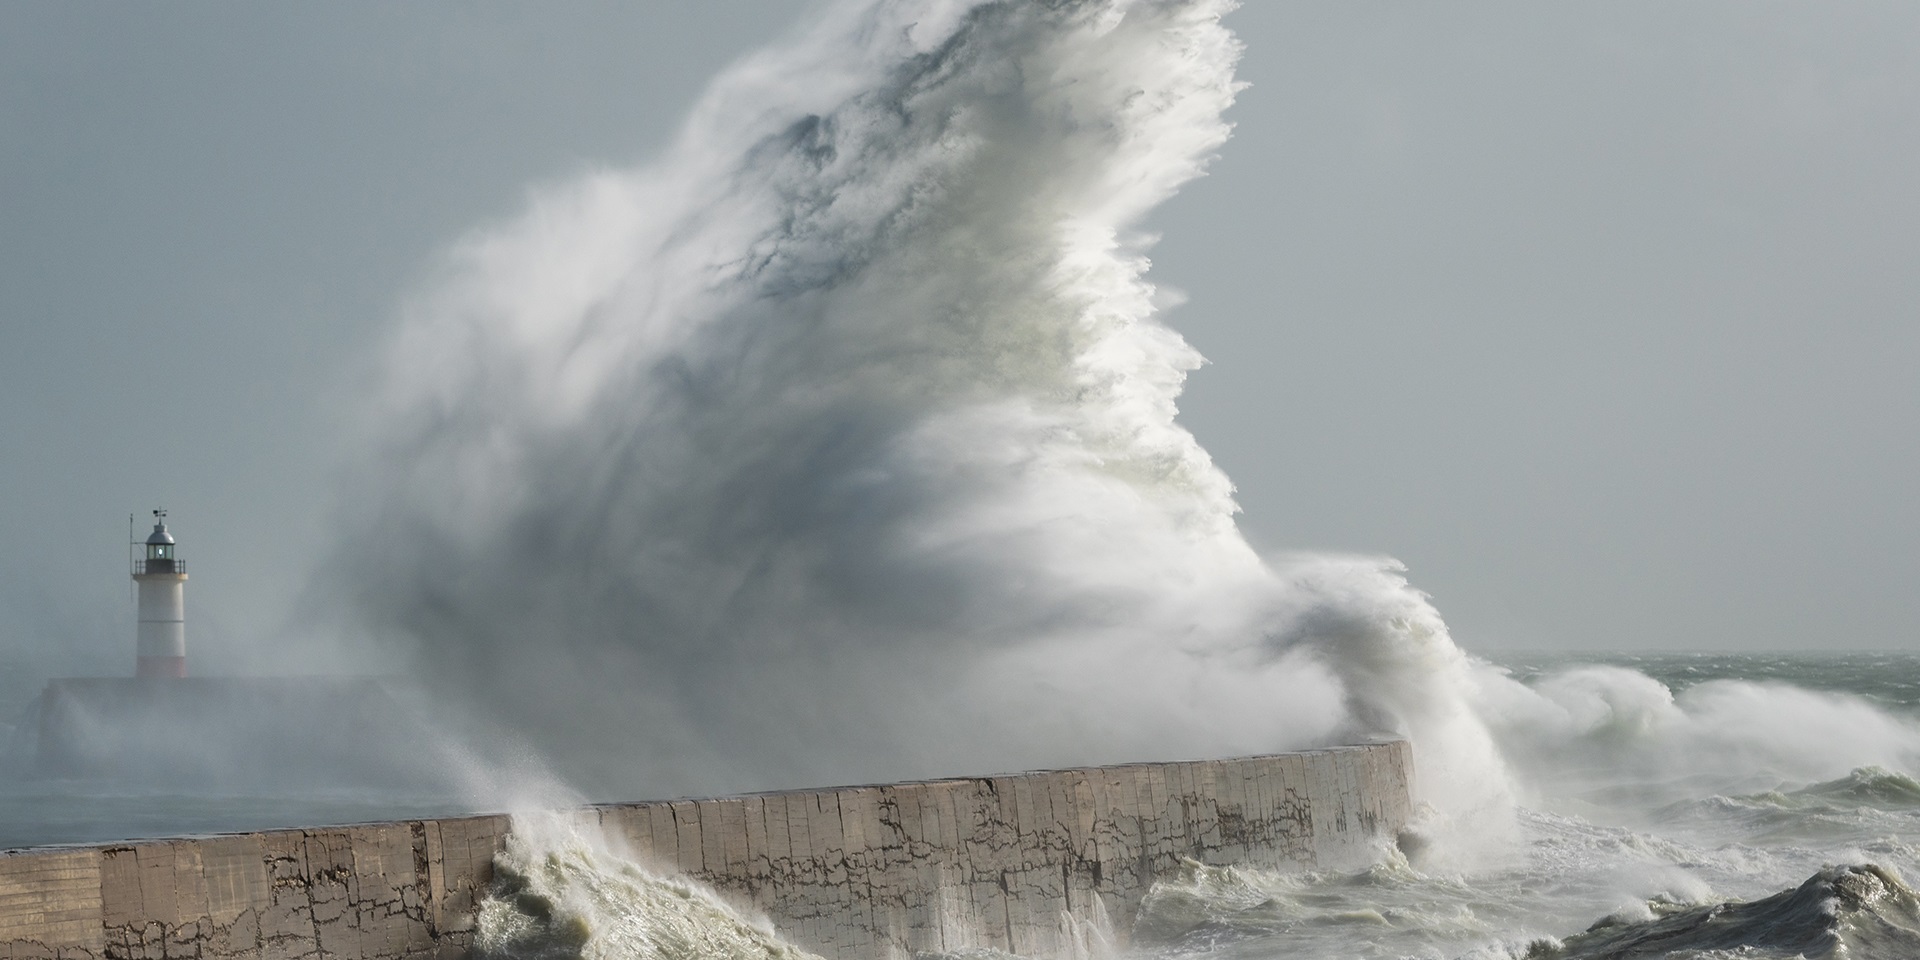 8-astounding-facts-about-storm-surges